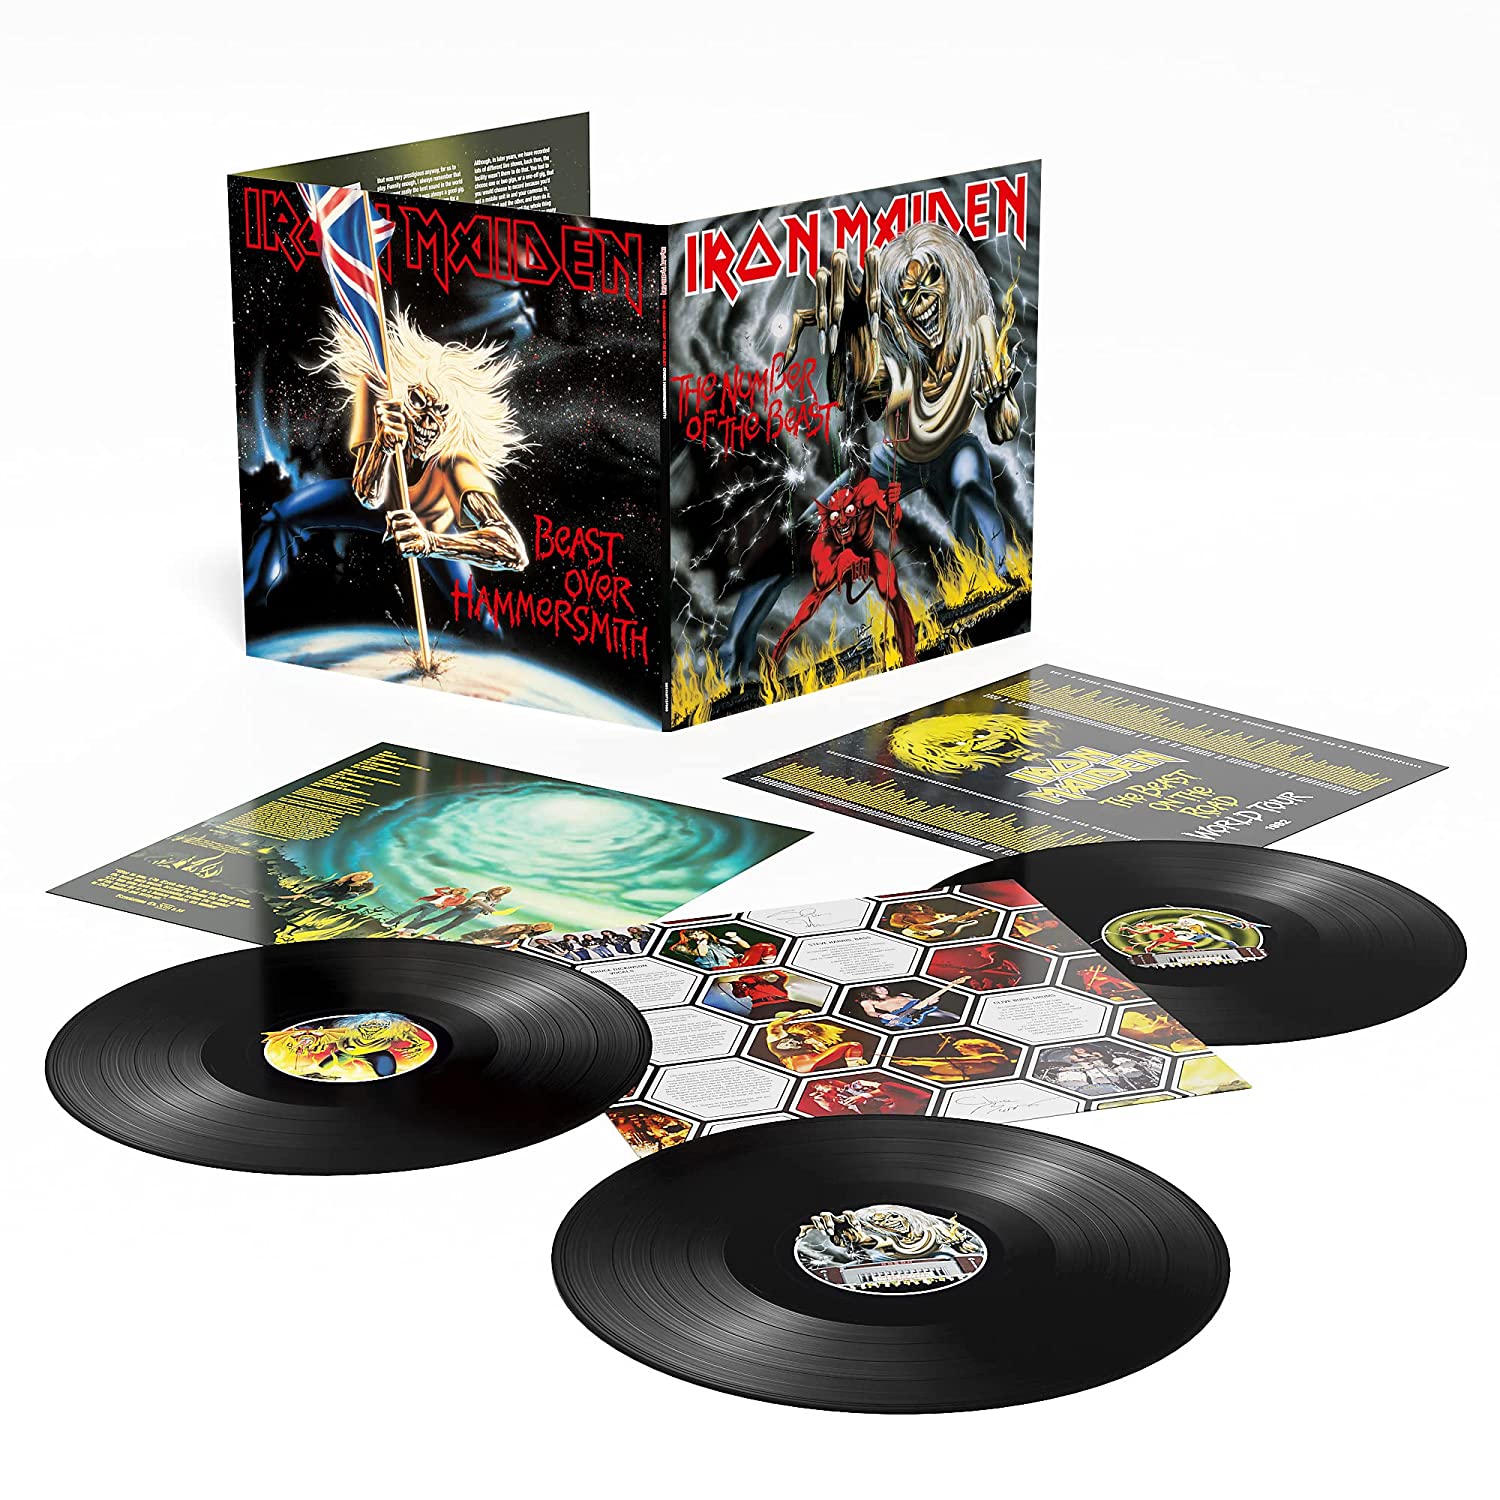 Iron Maiden The Number Of The Beast + Beast Over Hammersmith Vinyl LP